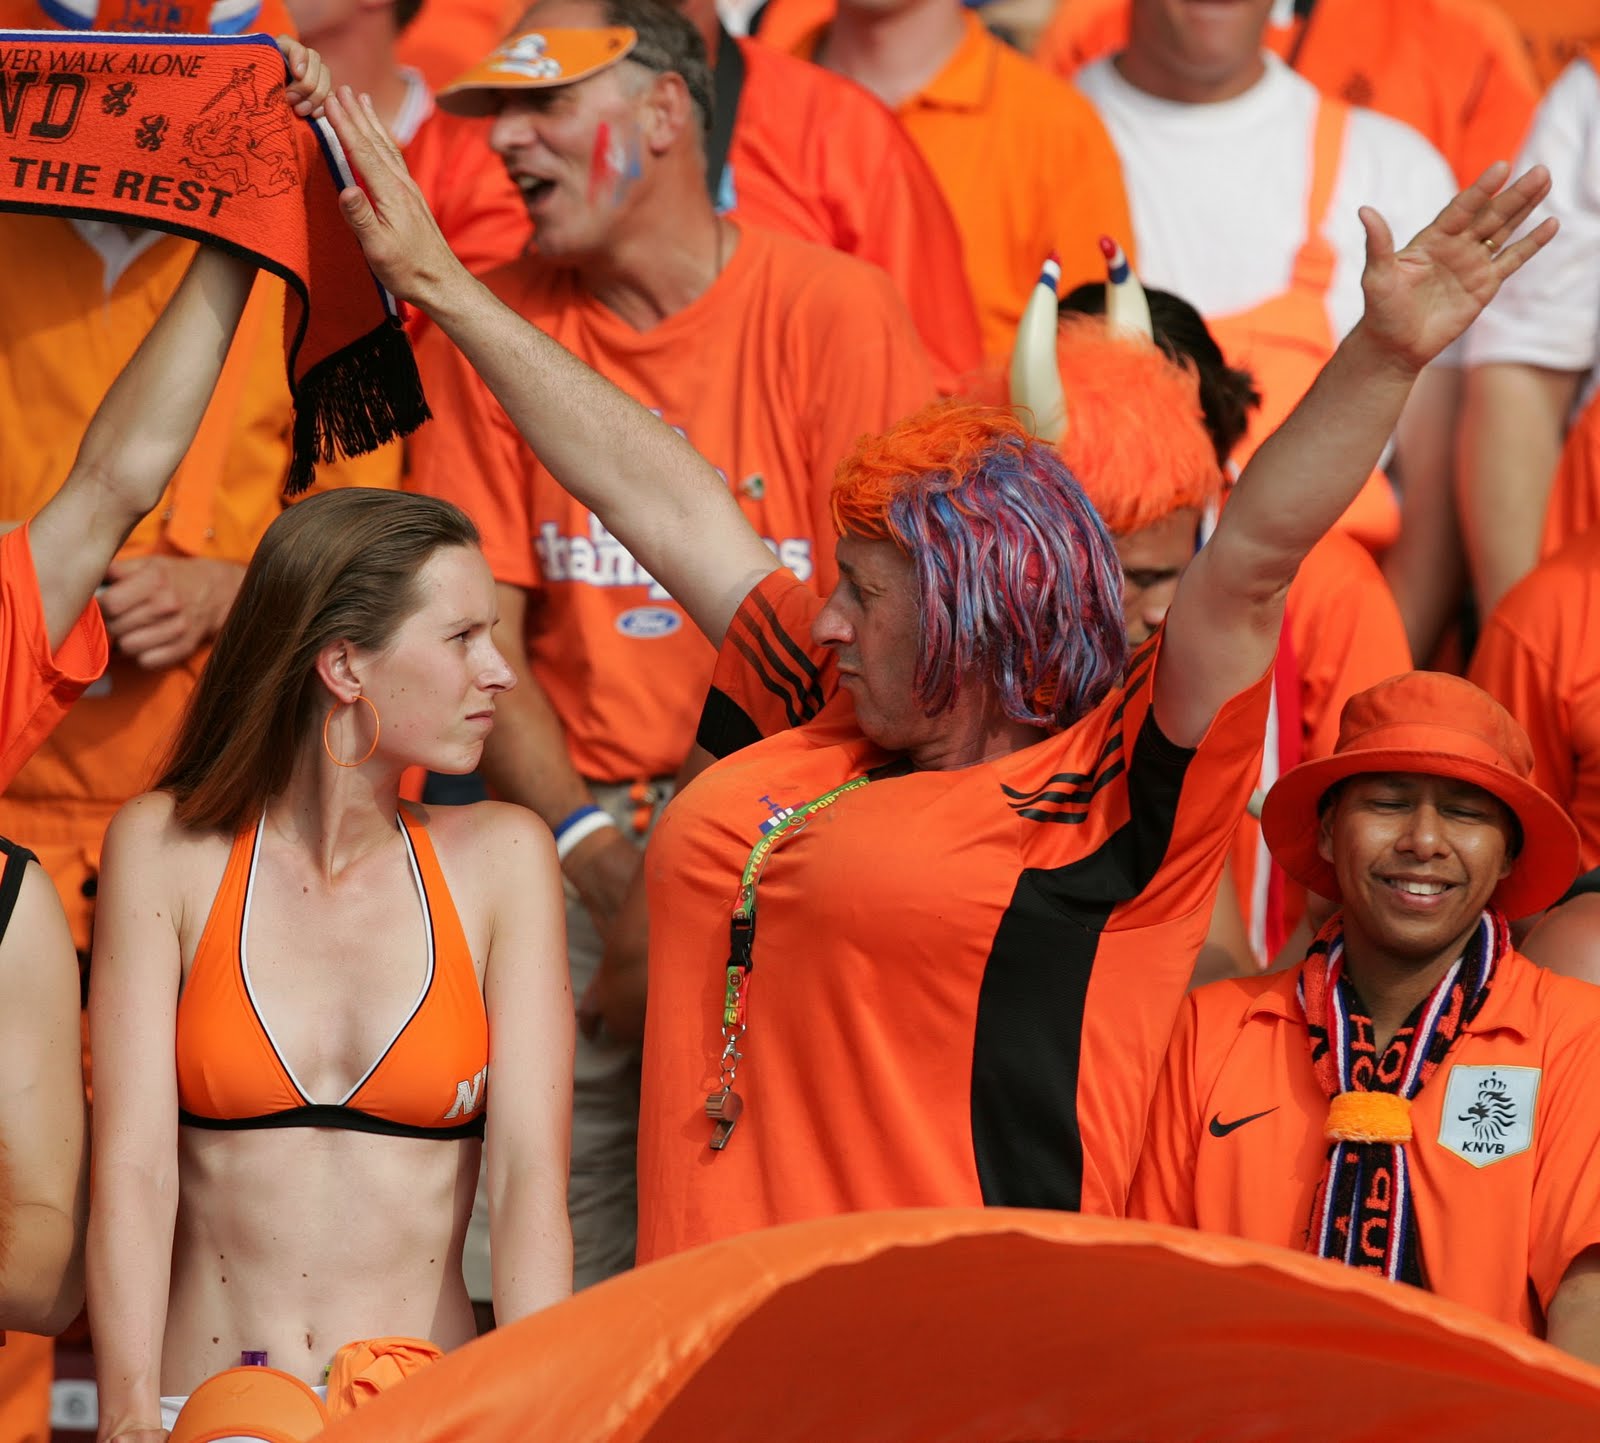 KNVB Orange Tracker: Insights into Dutch Football Fans